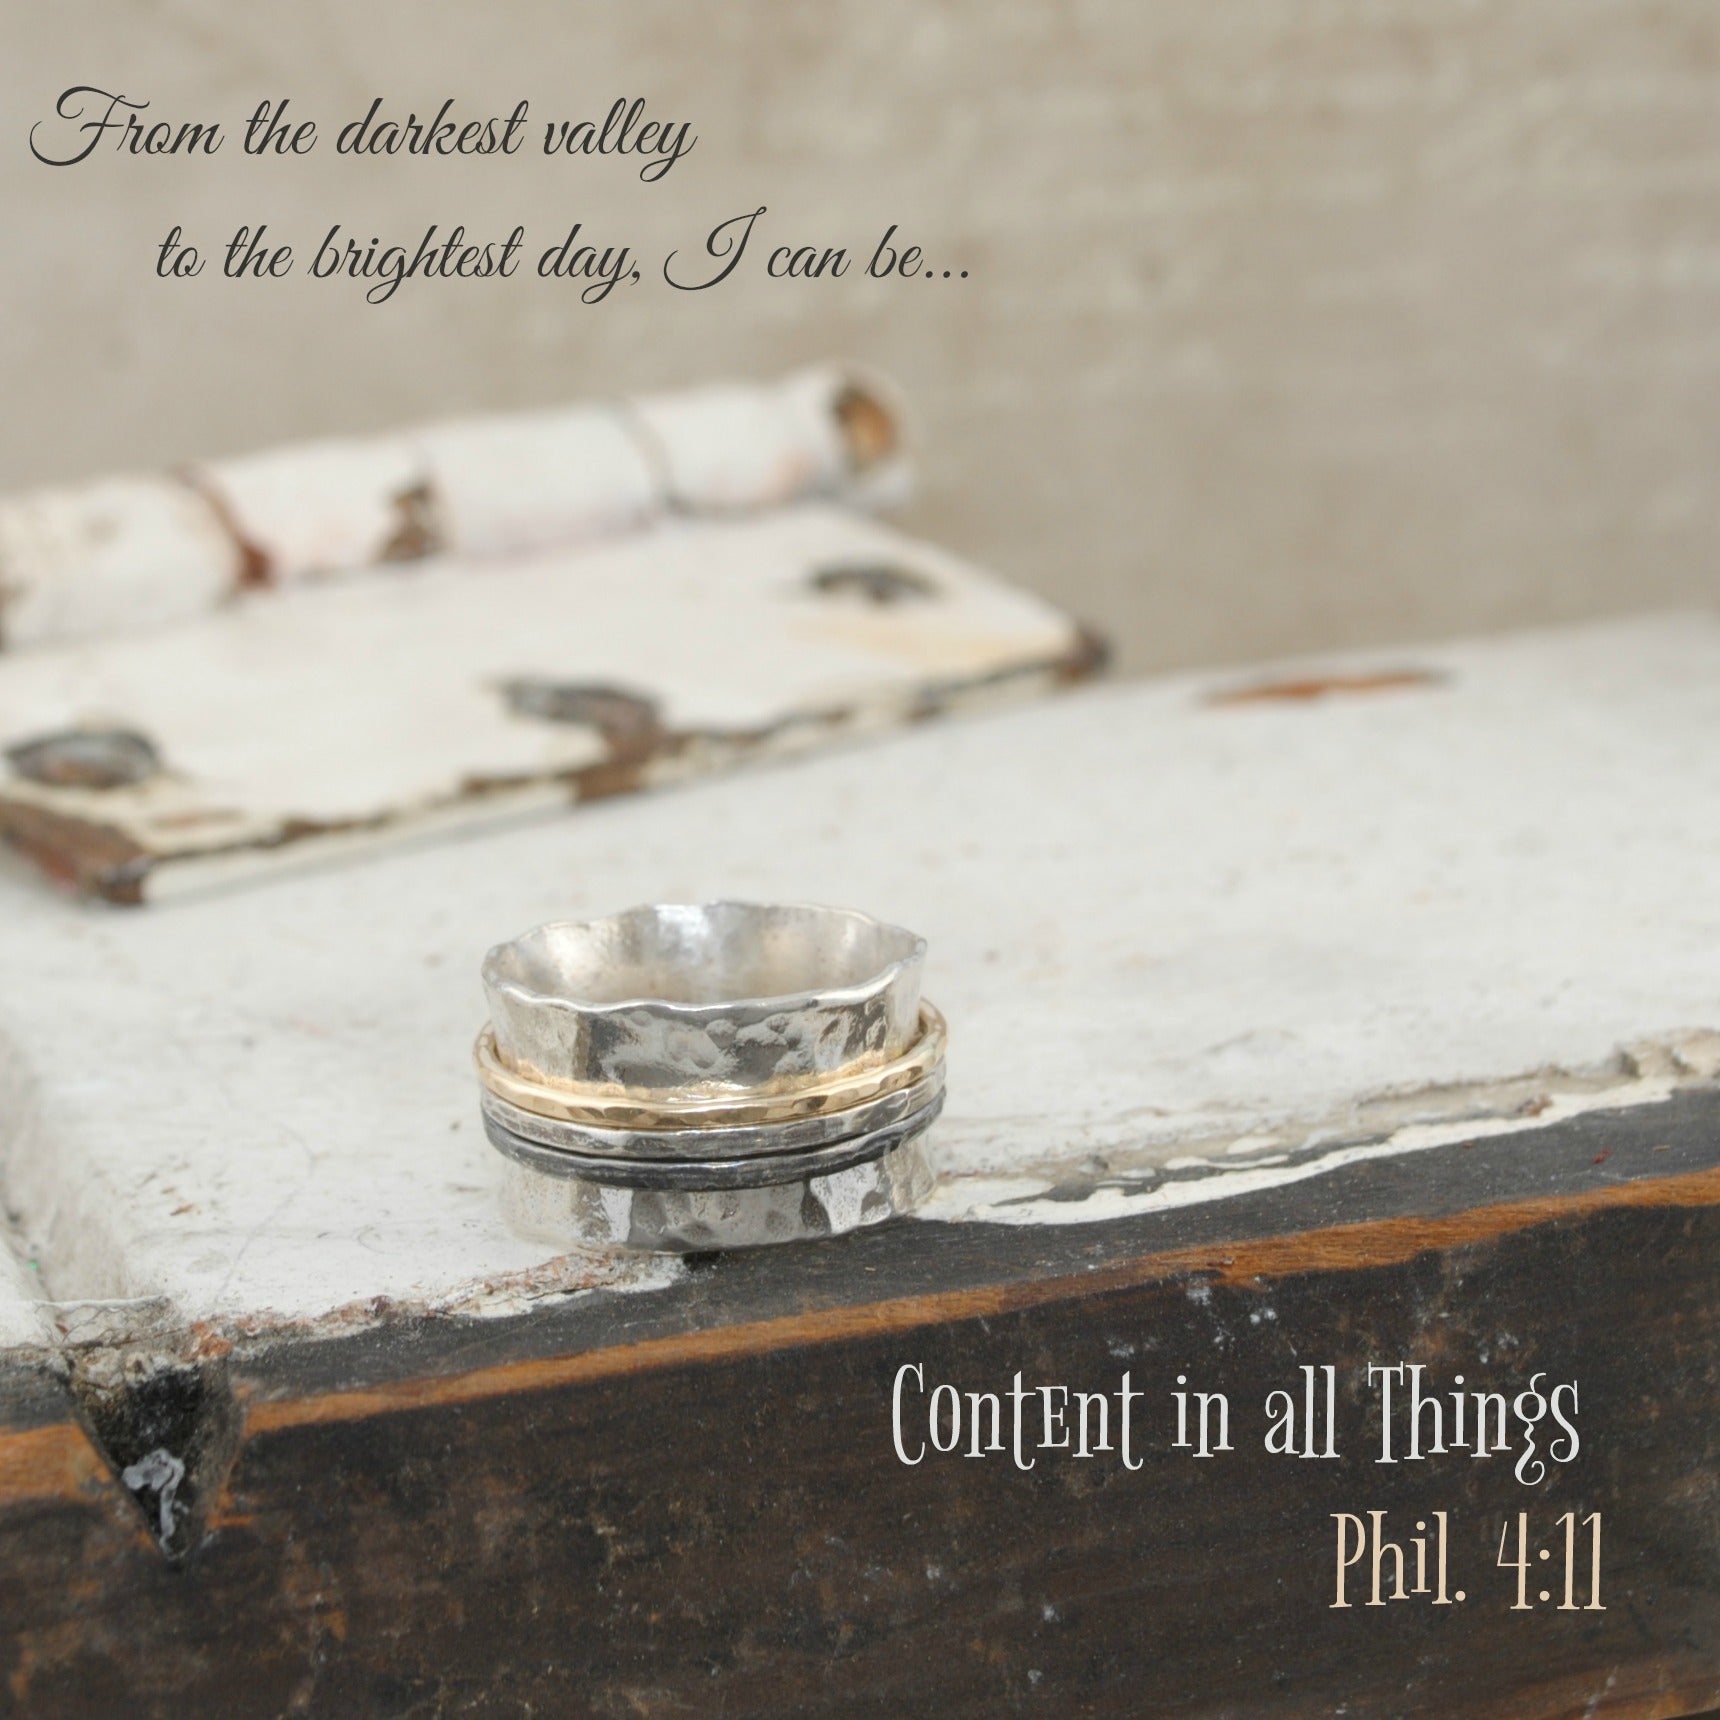 Philippians 4:11 Ring